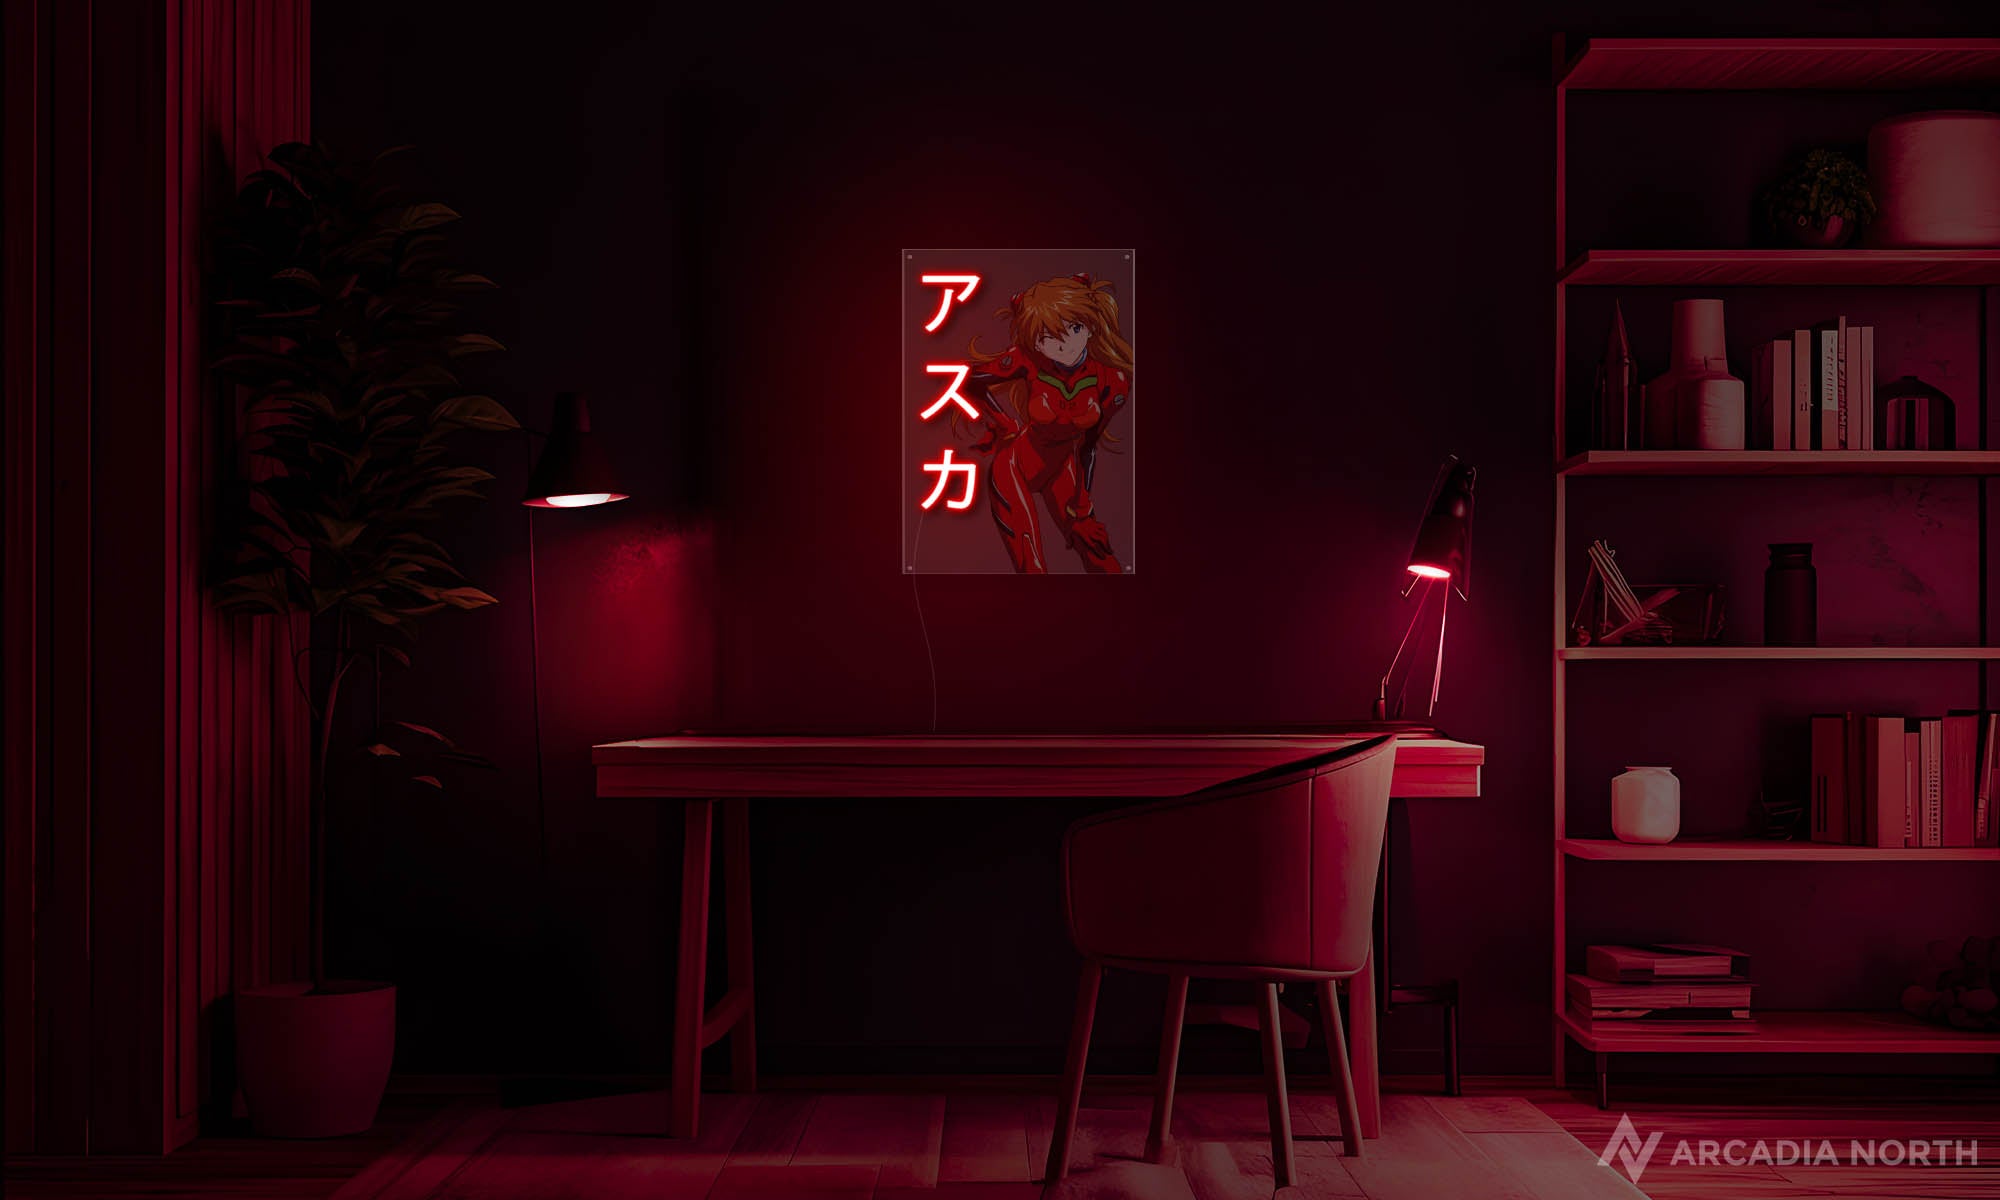 Arcadia North Original LED Poster featuring the anime Neon Genesis Evangelion with Asuka Langley Soryu and Asuka in Japanese Katakana illuminated by glowing neon LED lights. UV-printed on acrylic.